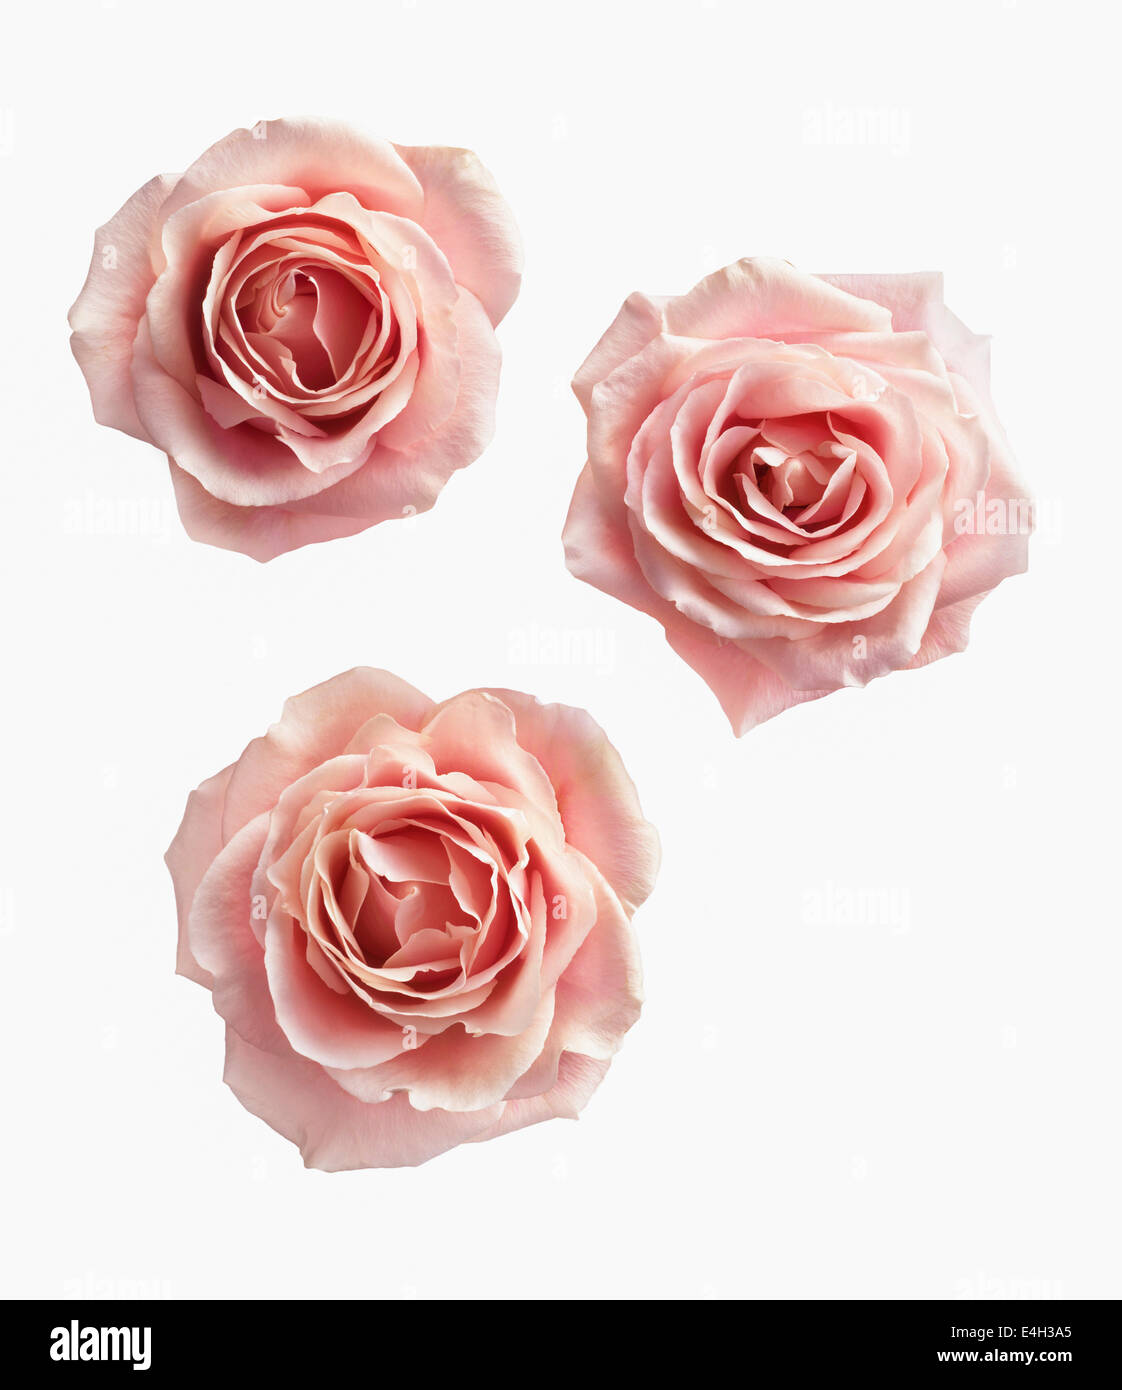 Rose, Rosa cultivar. Stock Photo